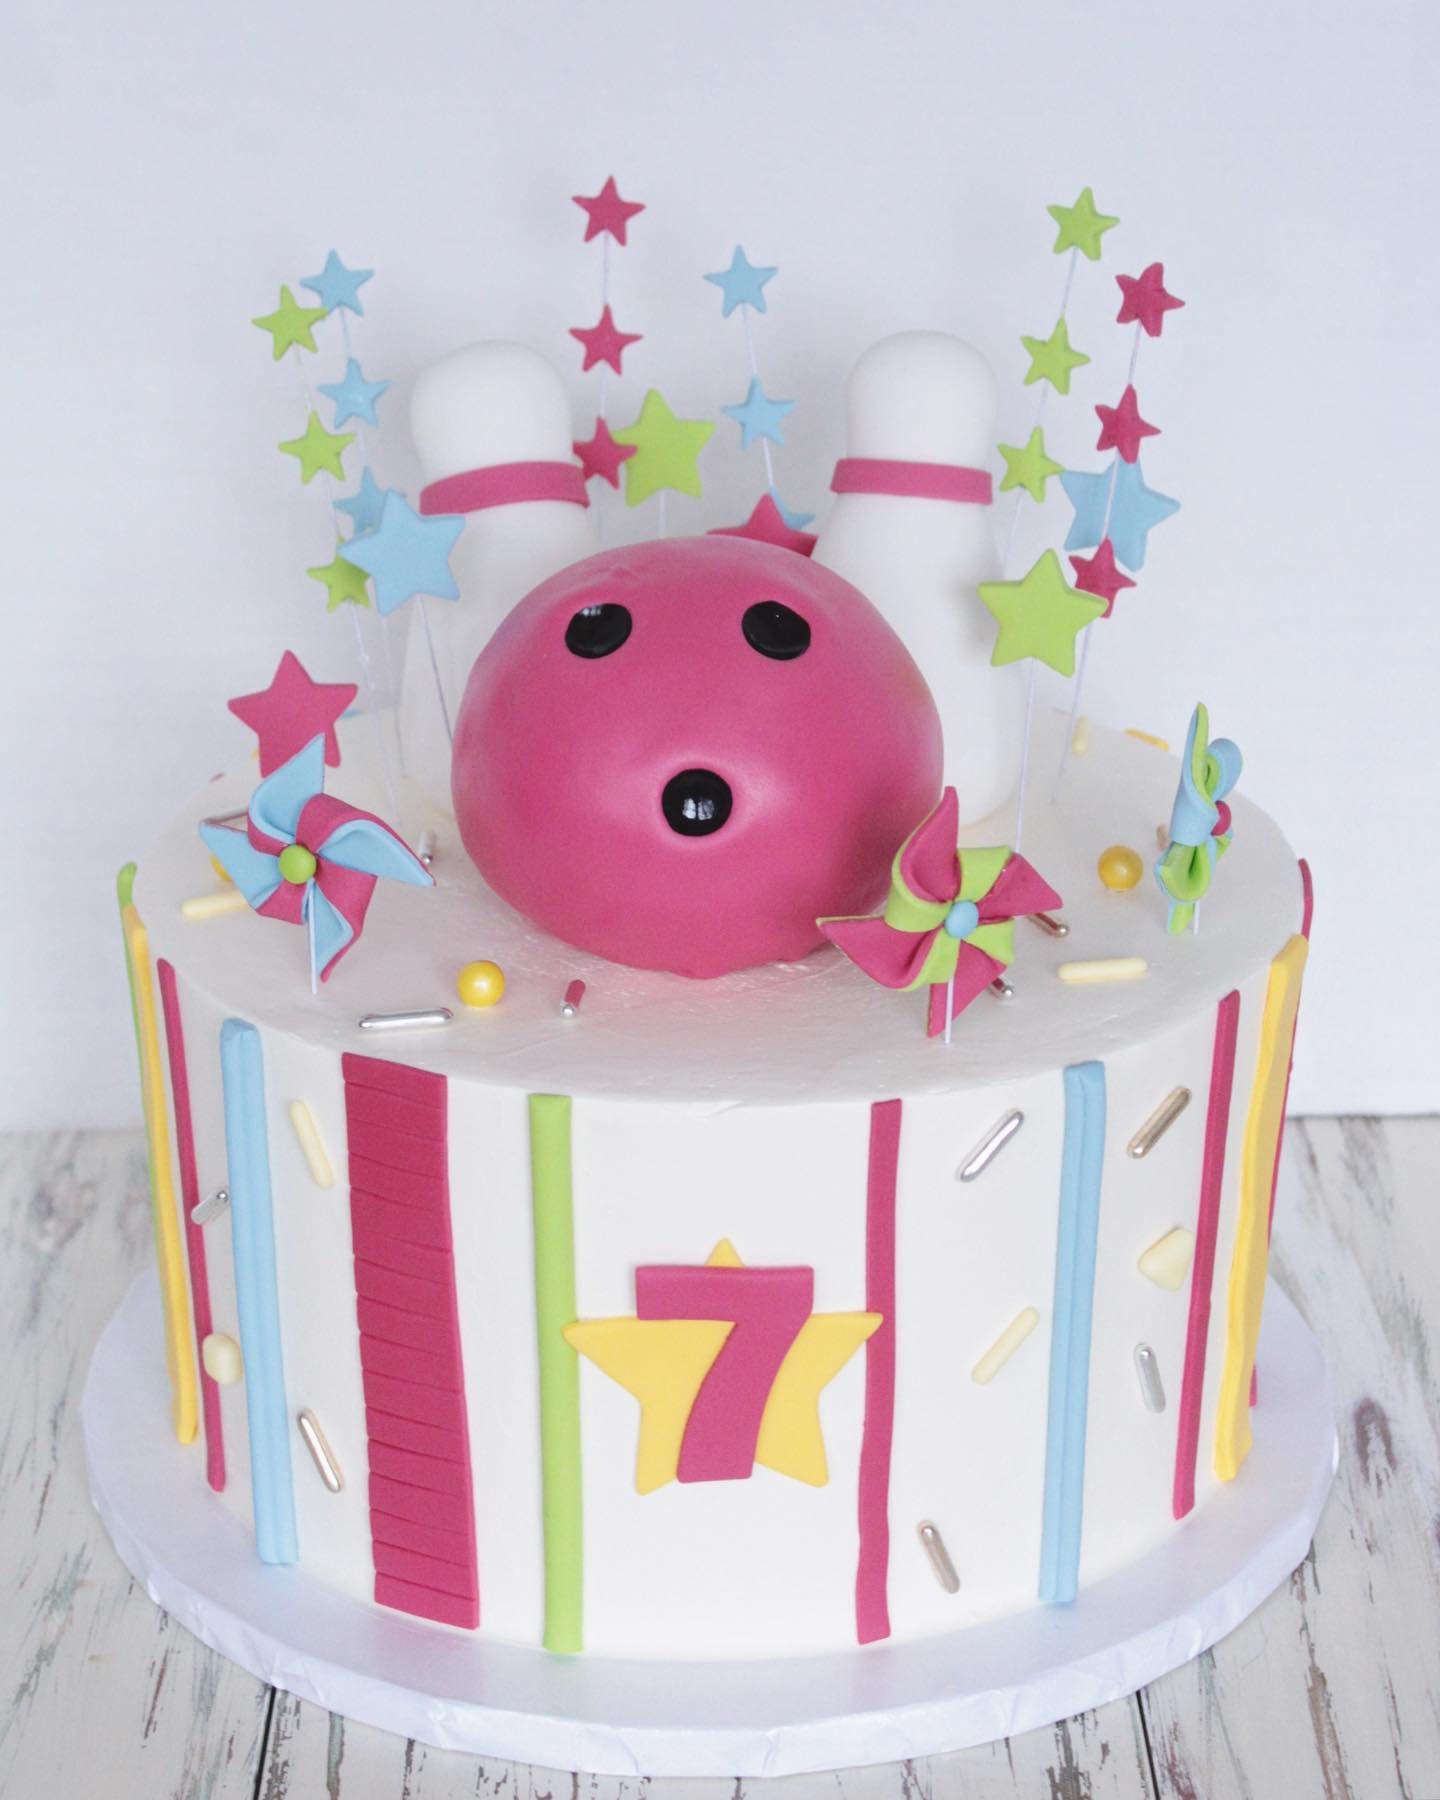 //Let&rsquo;s Bowl//

#fineanddandy #fineanddandysugarartistry #sugarartist #cakebyfineanddandy #bowlingcake #yuc #yyceats #yycfood #localyyc #cakecakecake #cakesdaily #cakedesign #happybirthday #birthdaycake